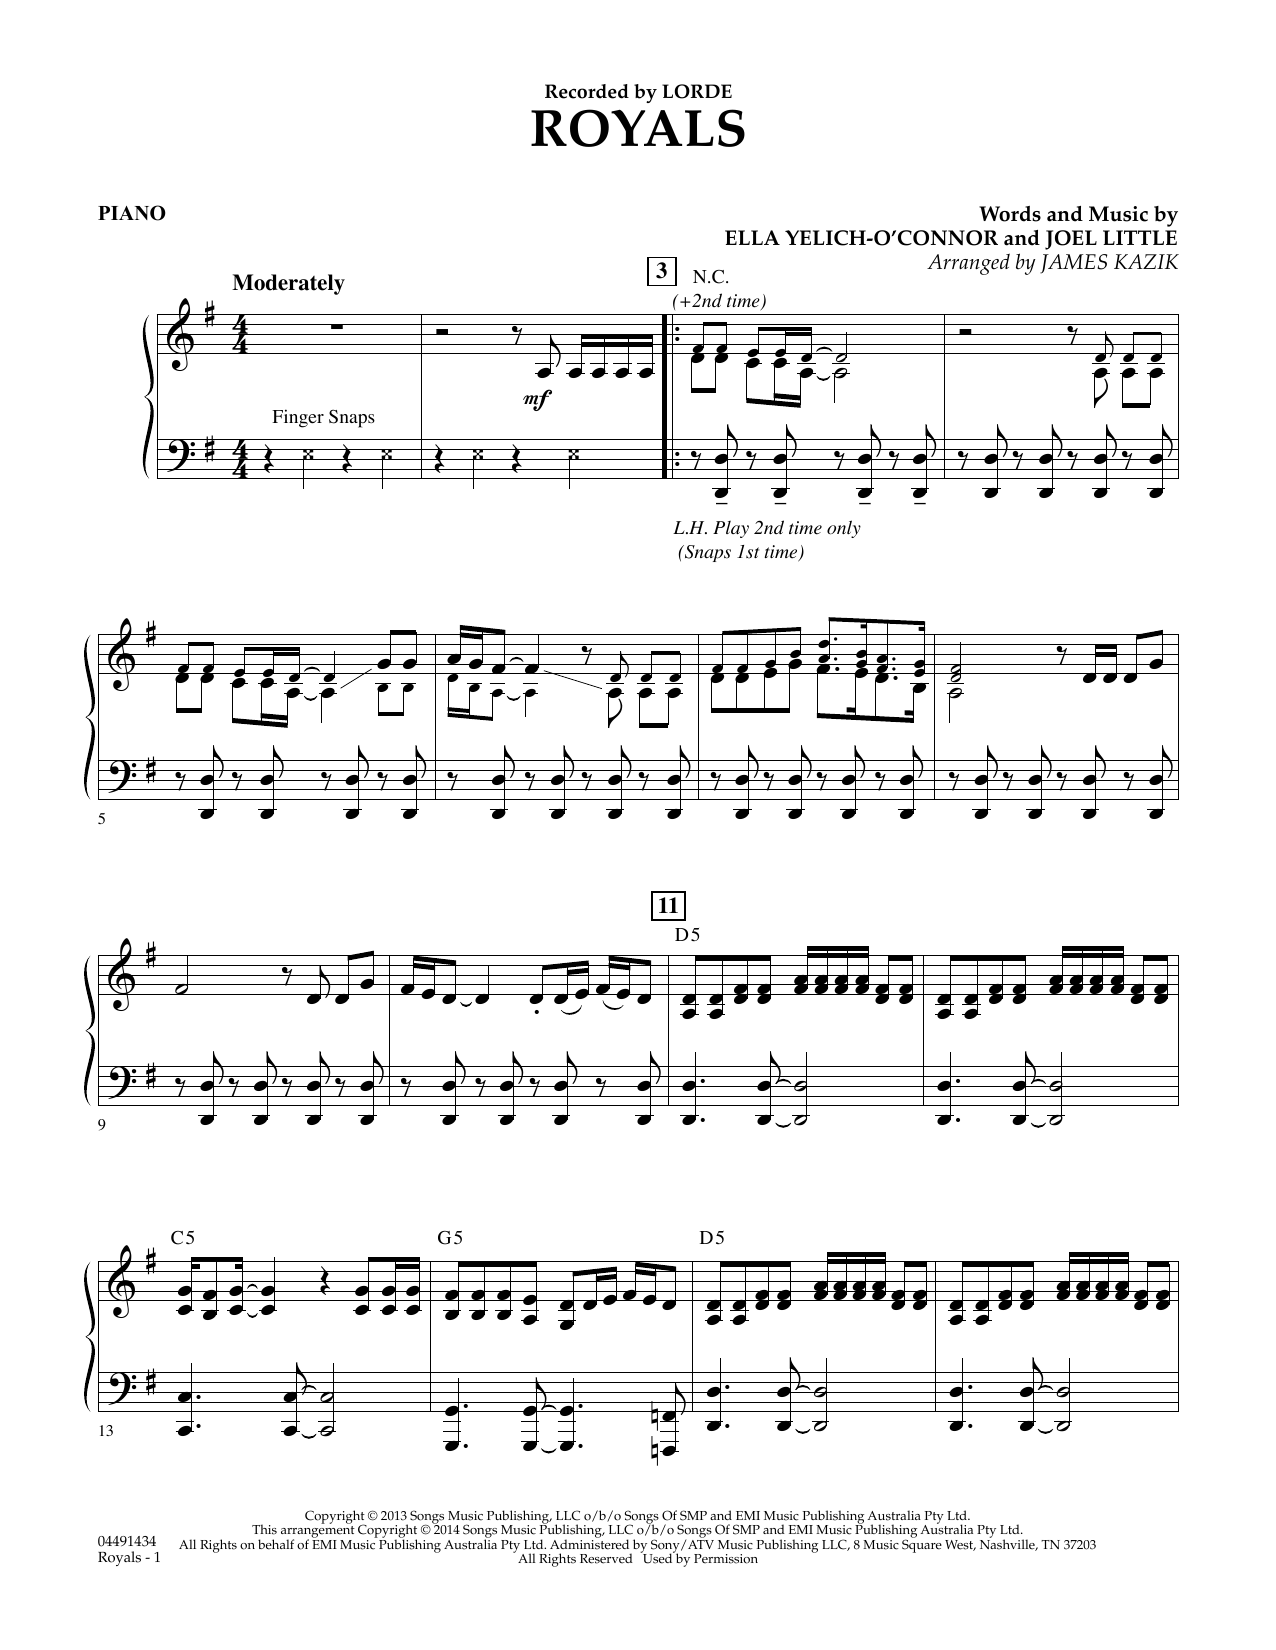 James Kazik Royals - Piano Sheet Music Notes & Chords for Orchestra - Download or Print PDF